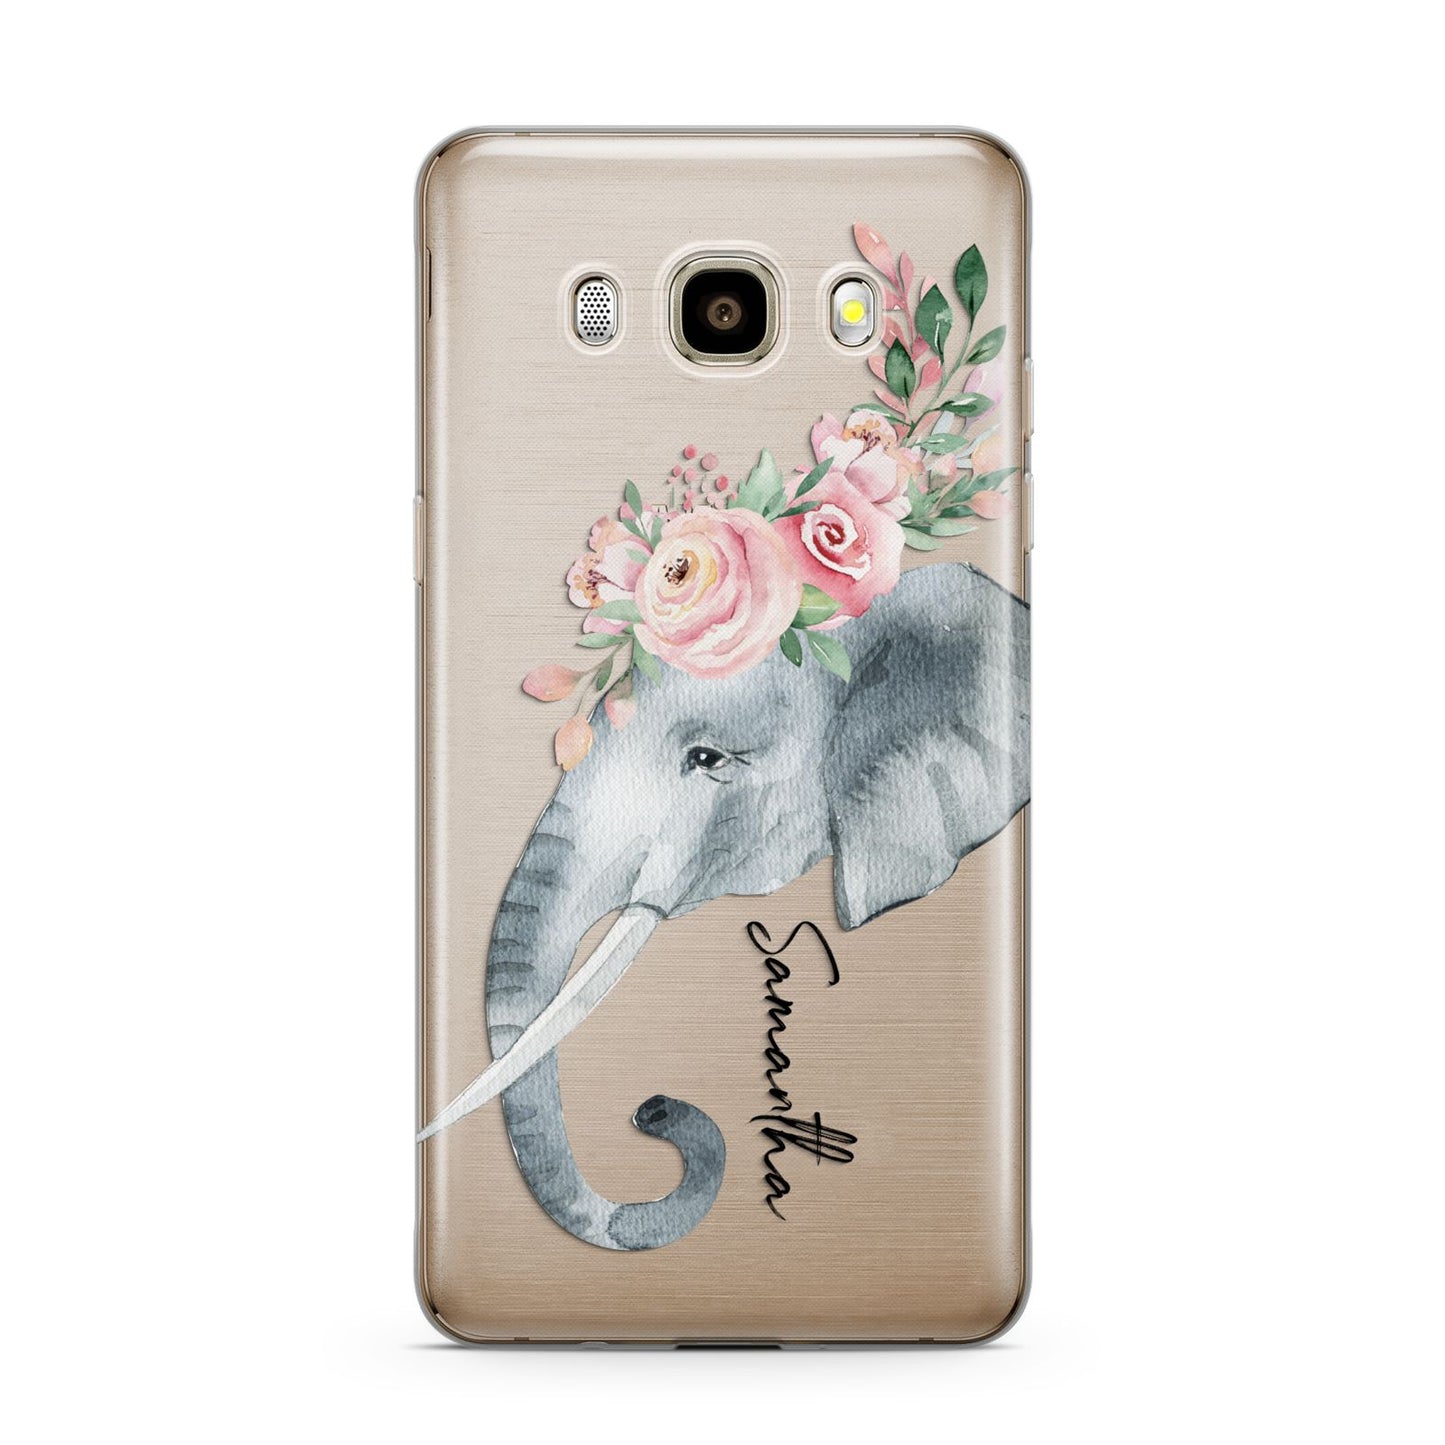 Personalised Elephant Samsung Galaxy J7 2016 Case on gold phone